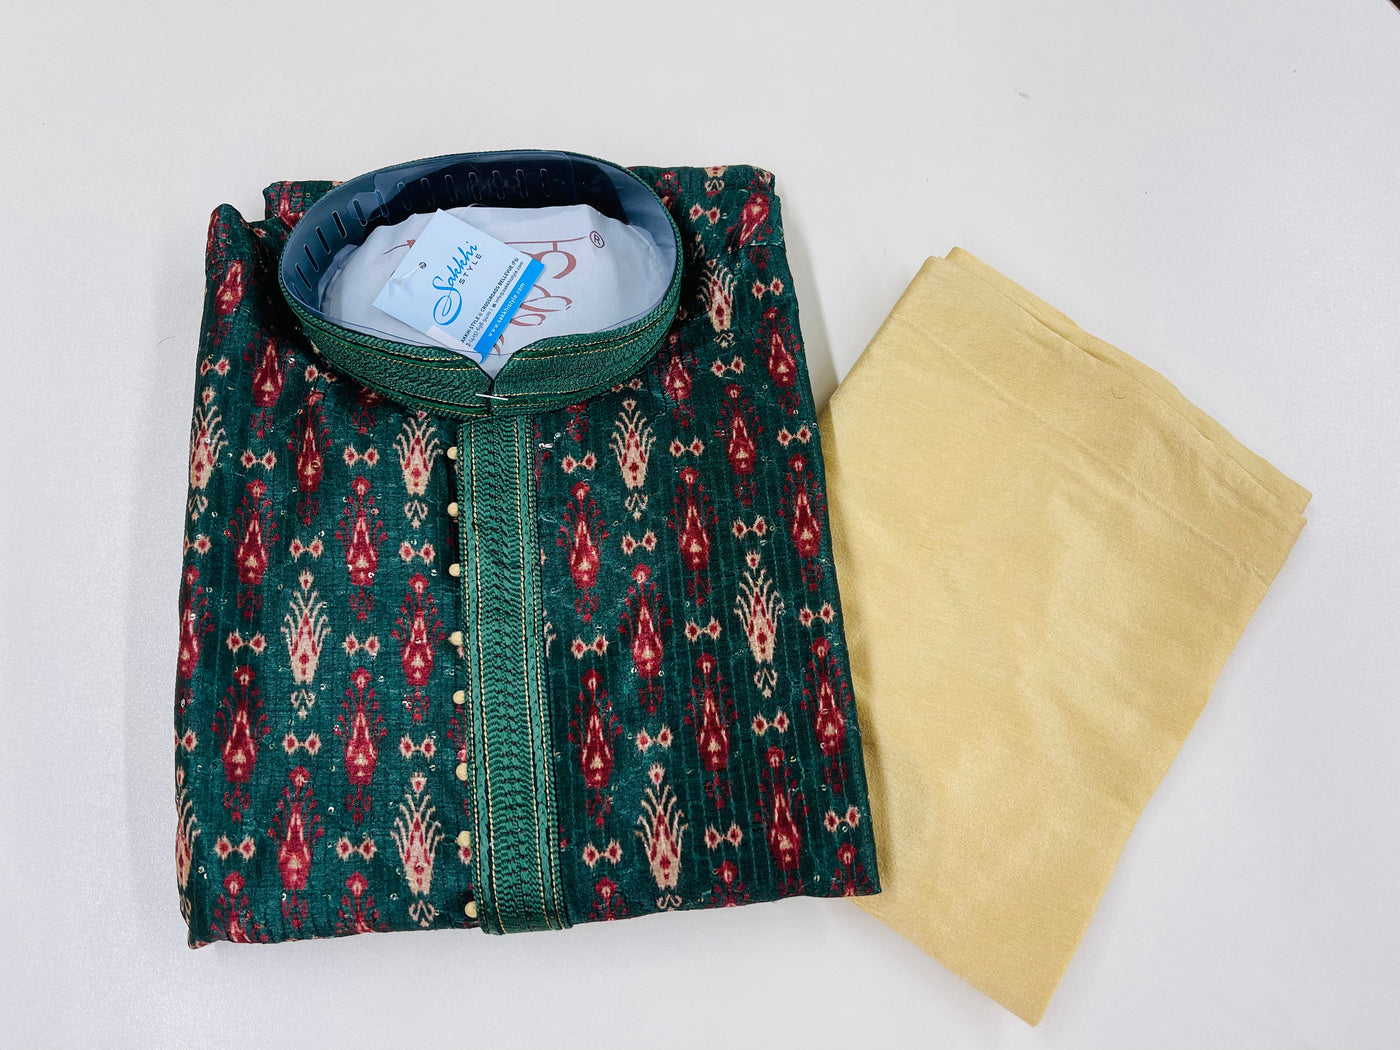 Green Printed cotton kurta with pyjama - Sakkhi Style